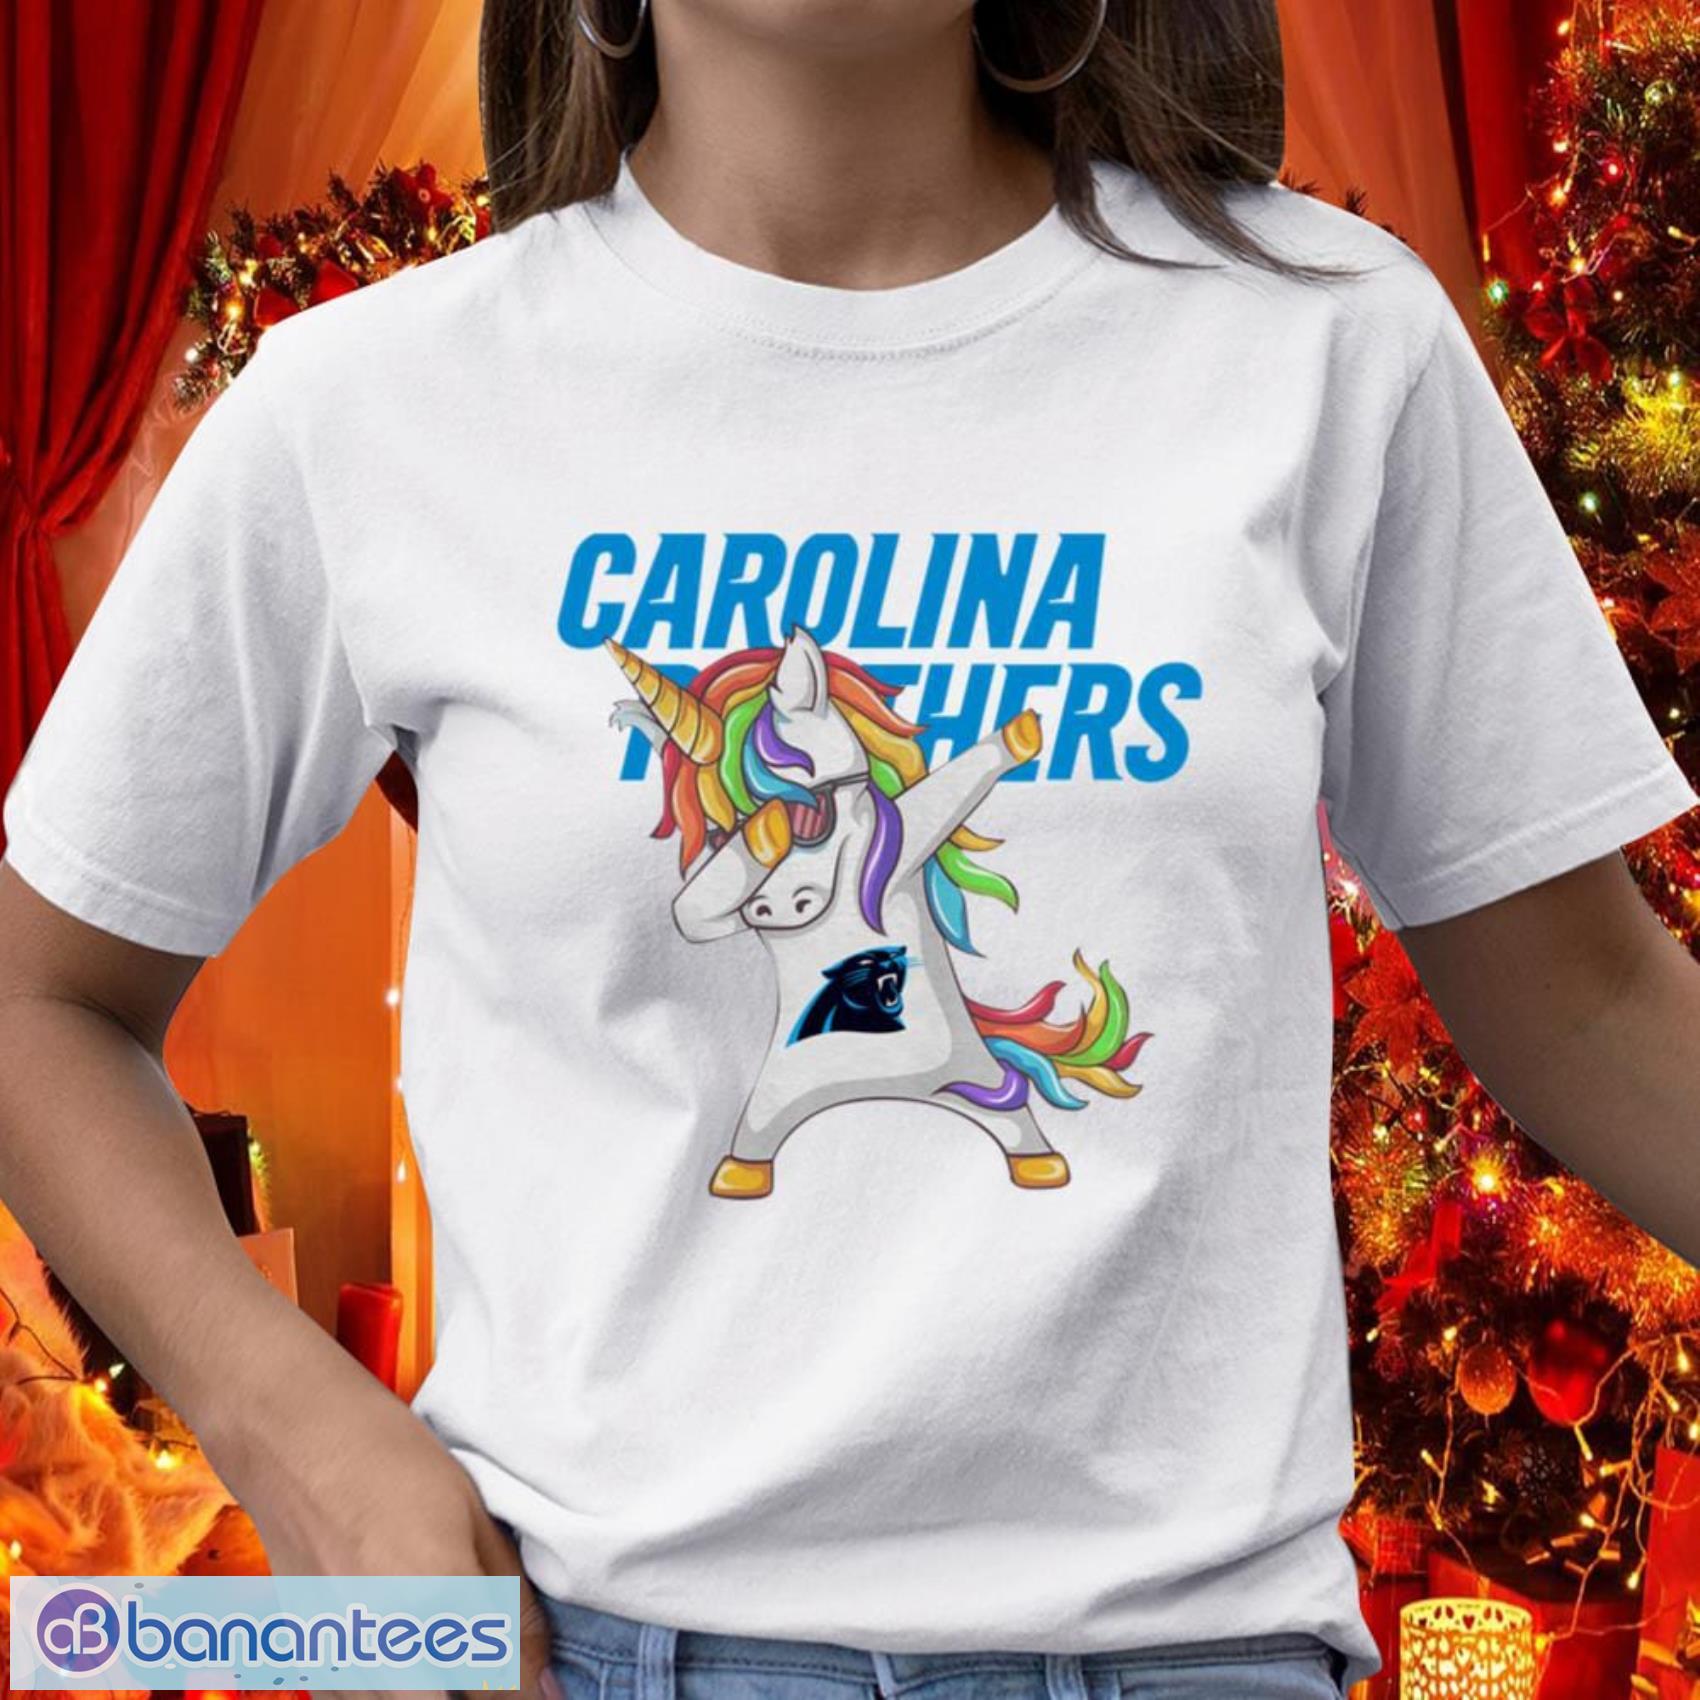 Carolina Panthers NFL Football Gift Fr Fans Funny Unicorn Dabbing Sports T Shirt - Carolina Panthers NFL Football Funny Unicorn Dabbing Sports T Shirt_1